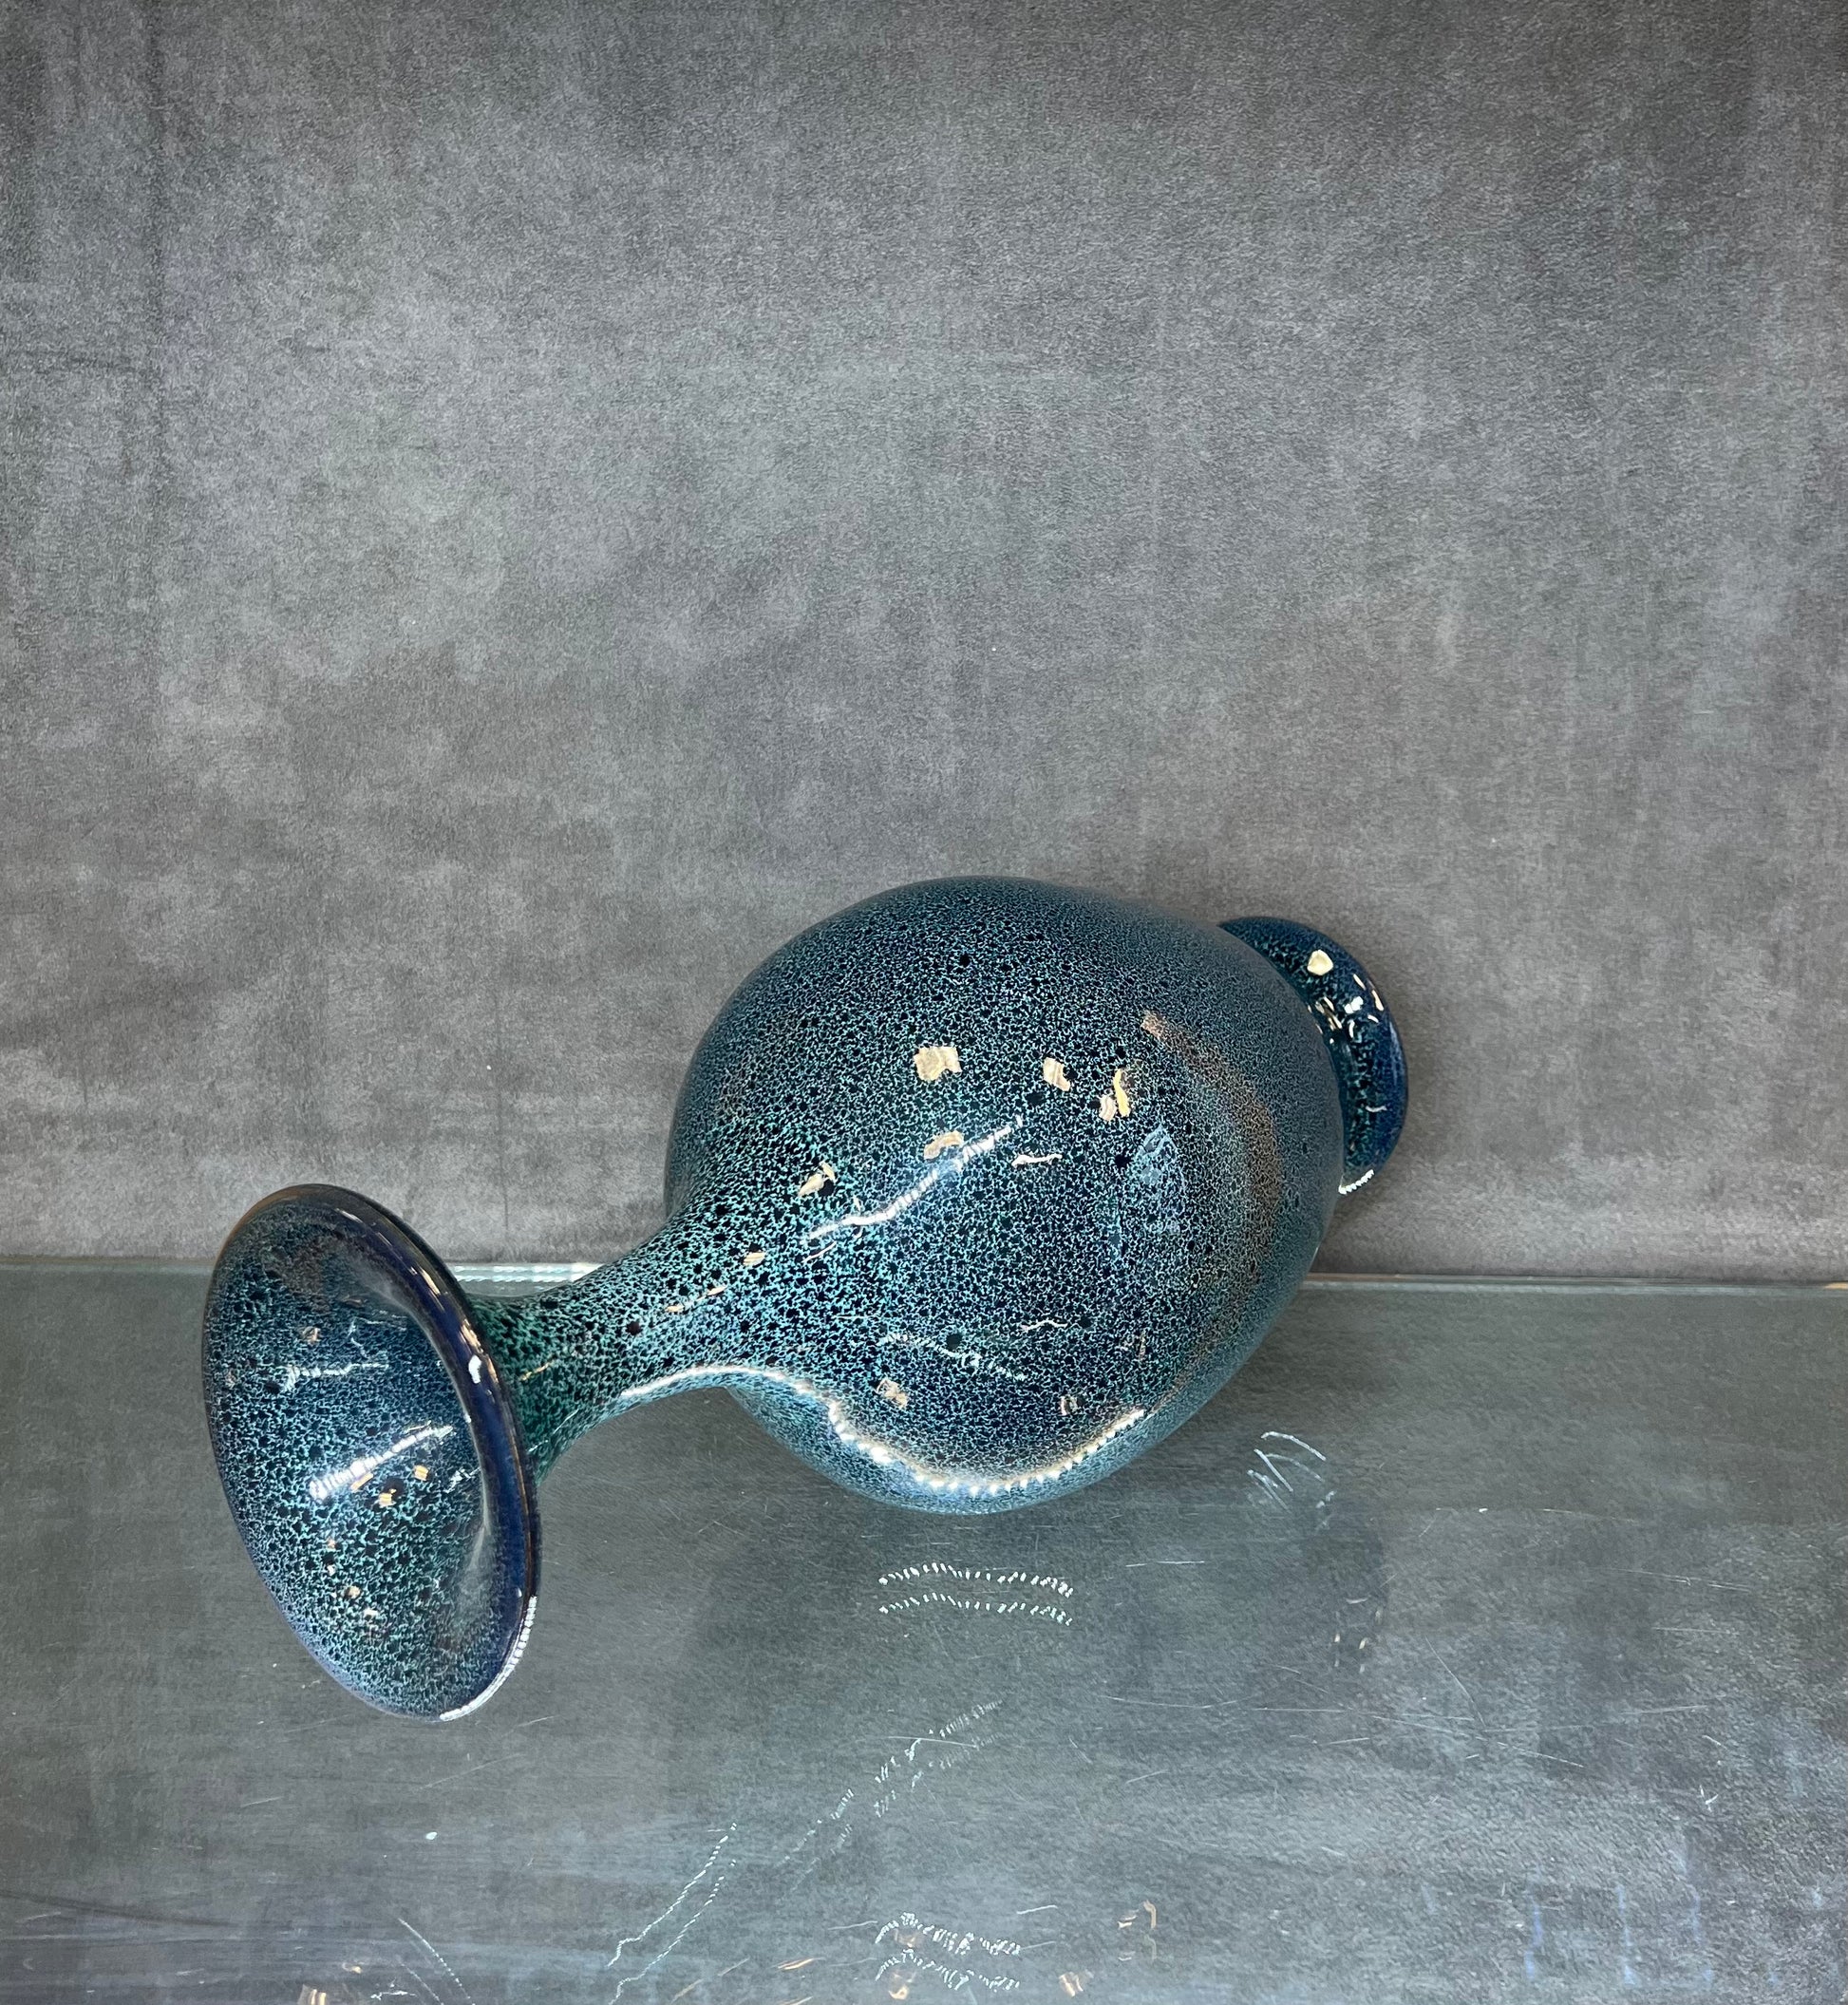 Glazed Blue Trumpet Vase - HighTouch 